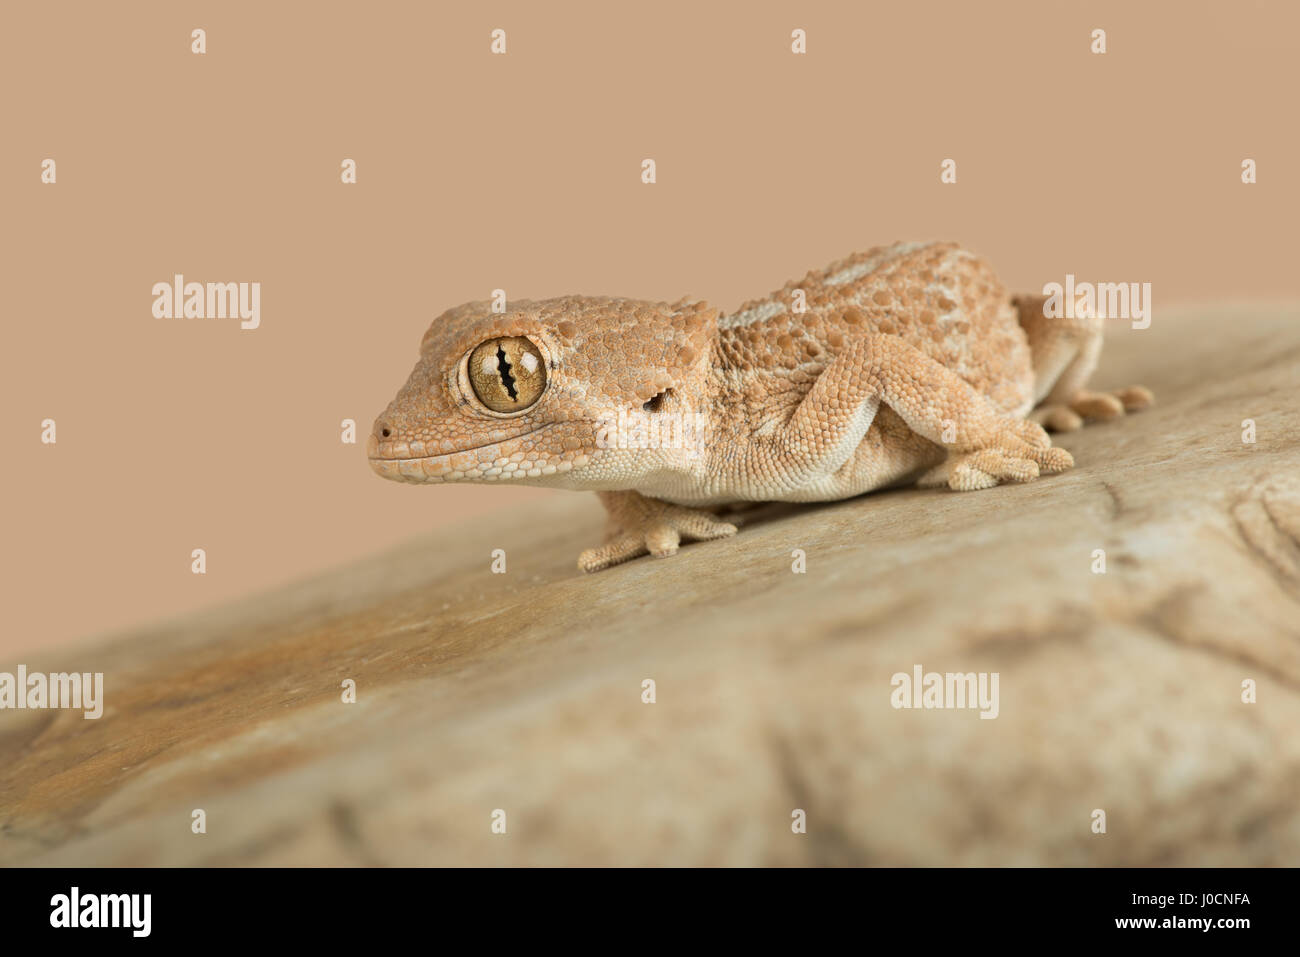 Gecko casqué (Tarentola chazaliae) Banque D'Images